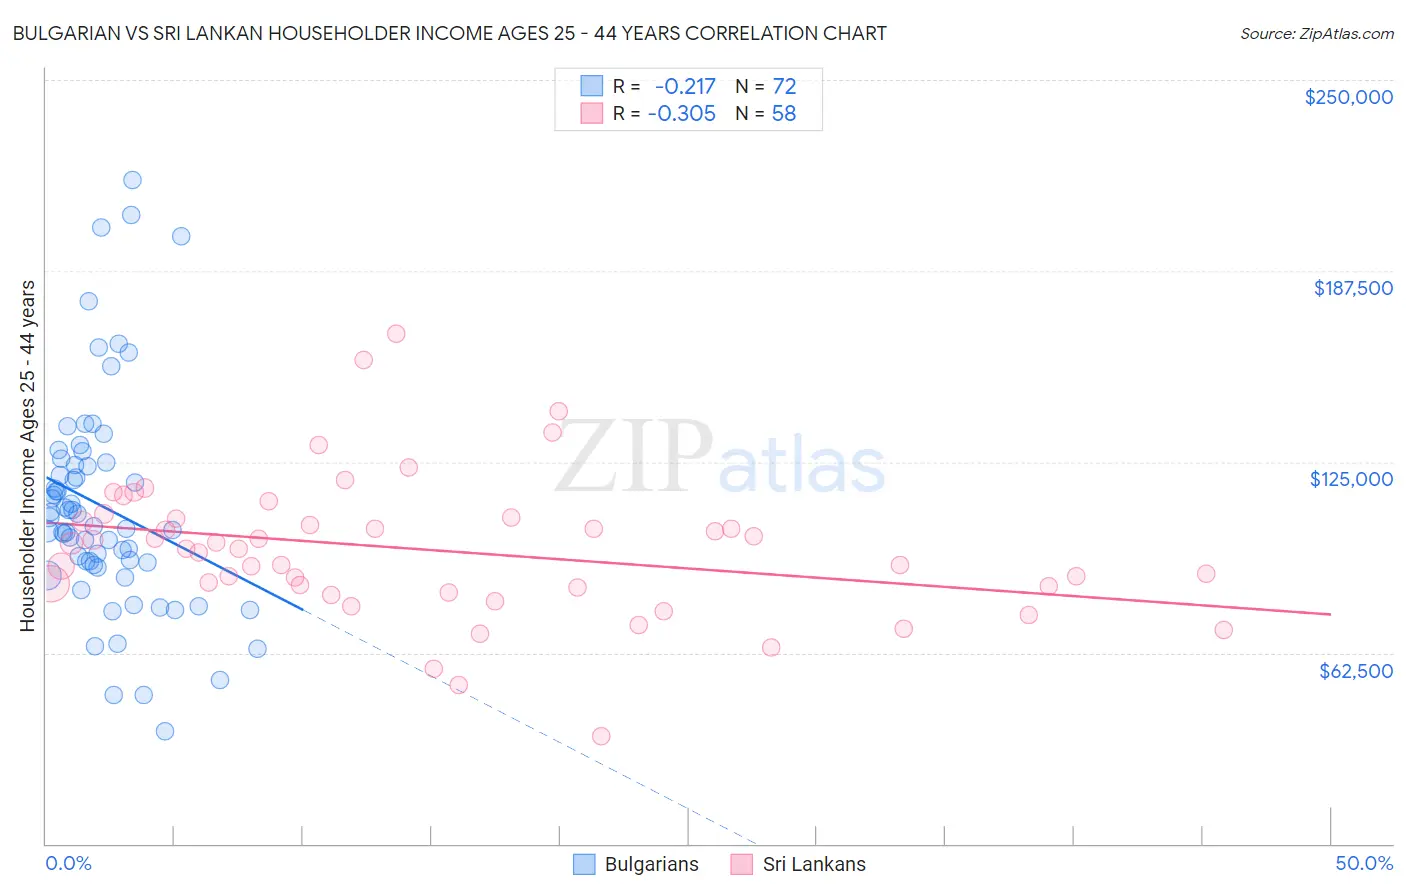 Bulgarian vs Sri Lankan Householder Income Ages 25 - 44 years